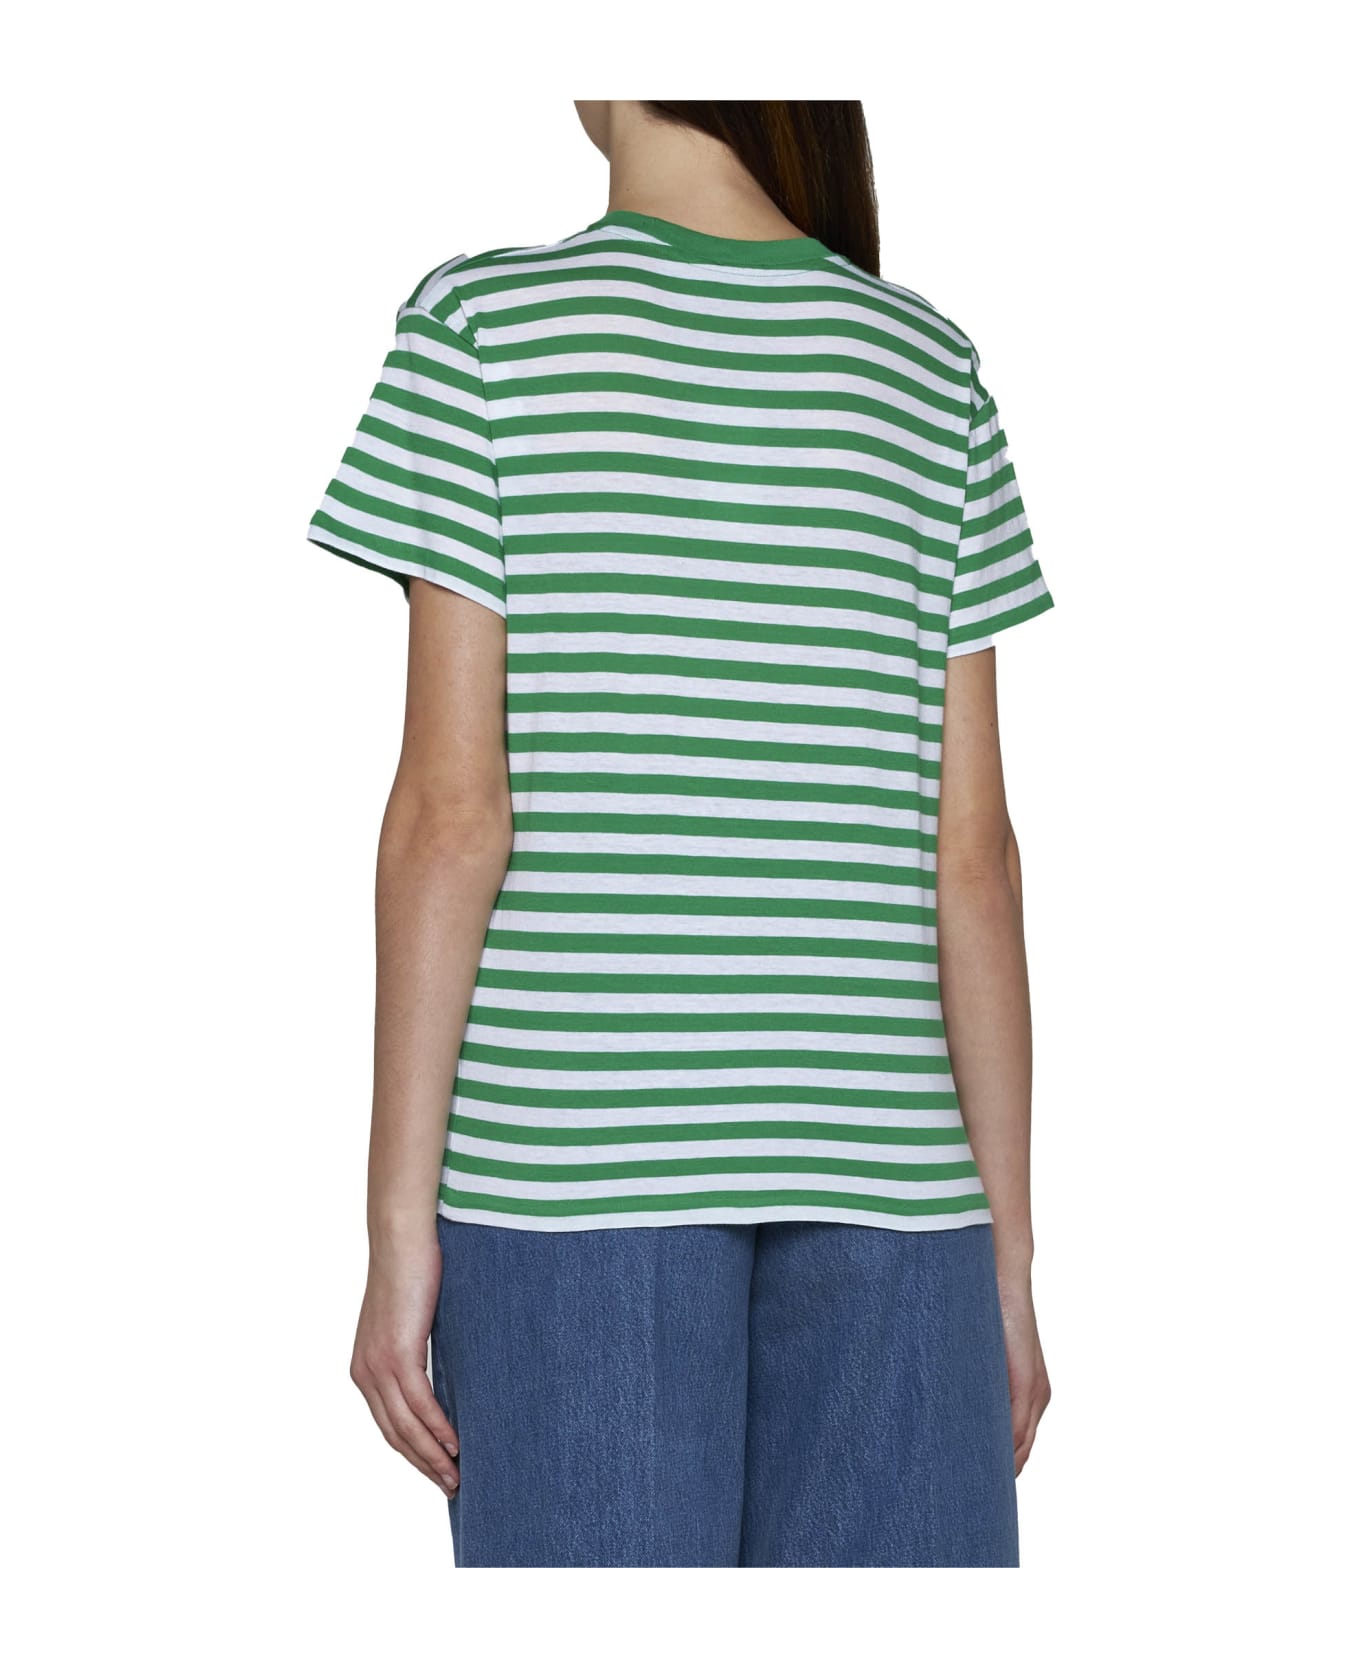 Polo Ralph Lauren T-Shirt - Preppy green/white Tシャツ